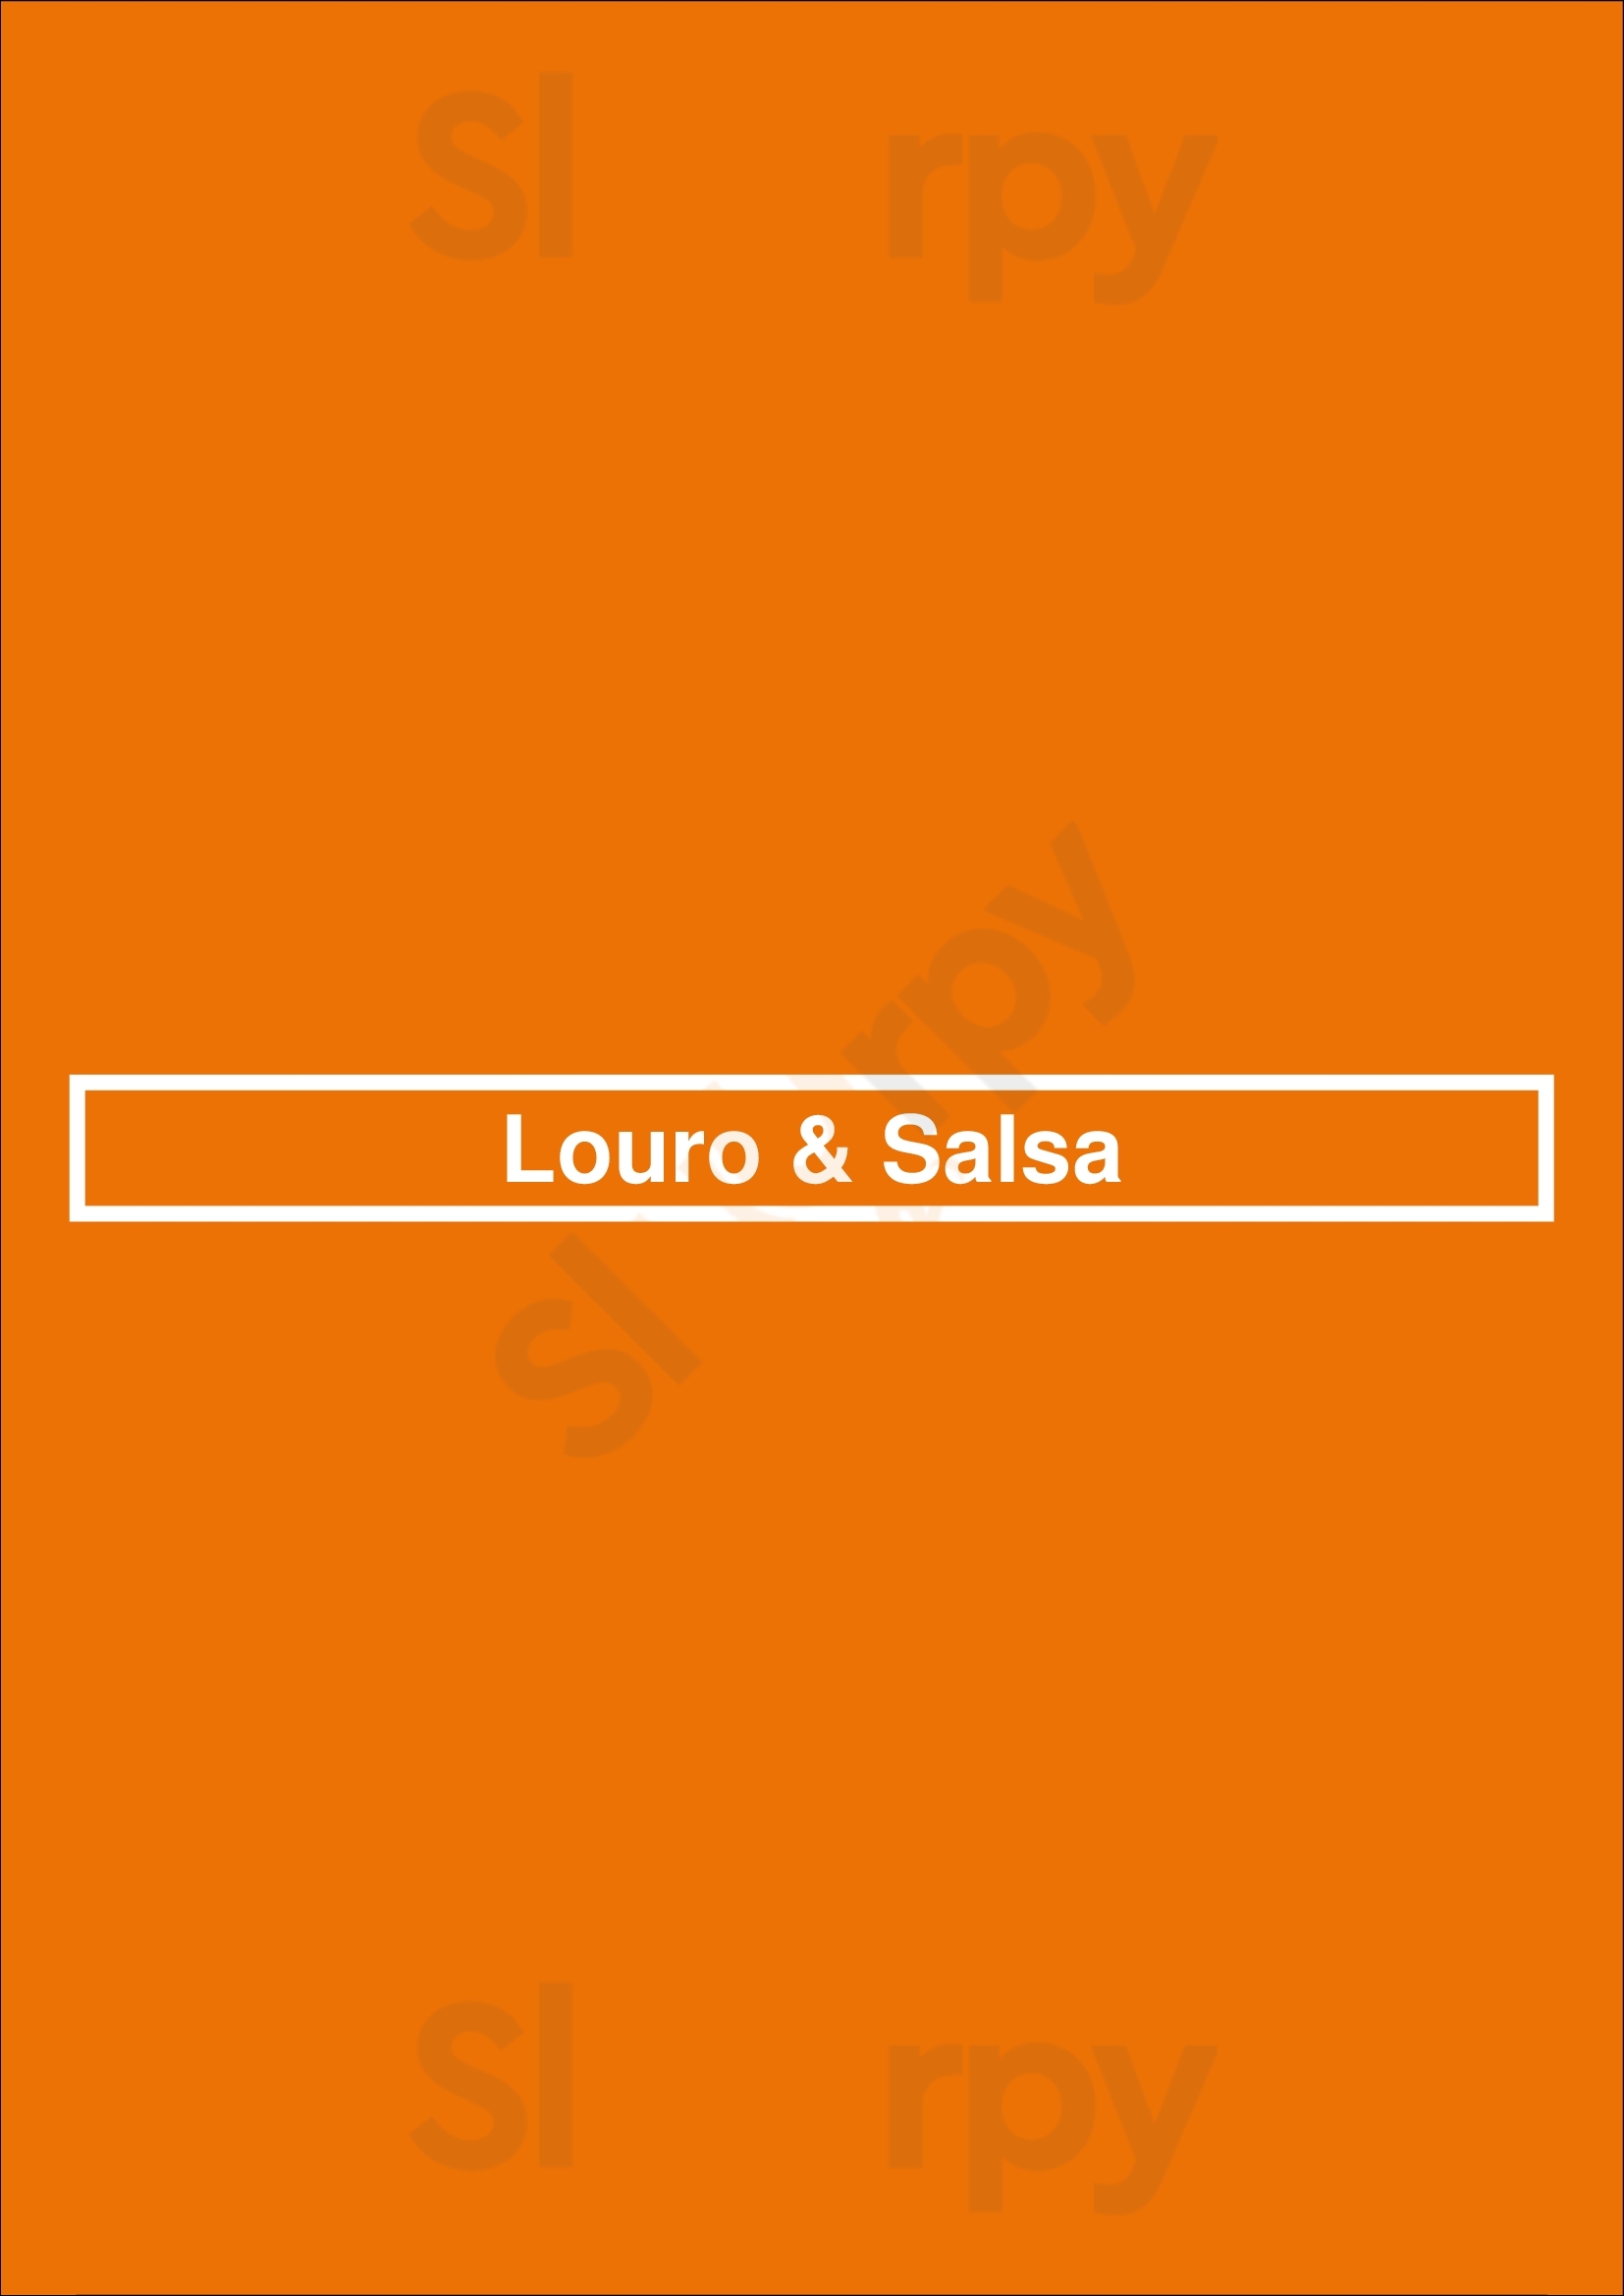 Louro & Salsa Albufeira Menu - 1